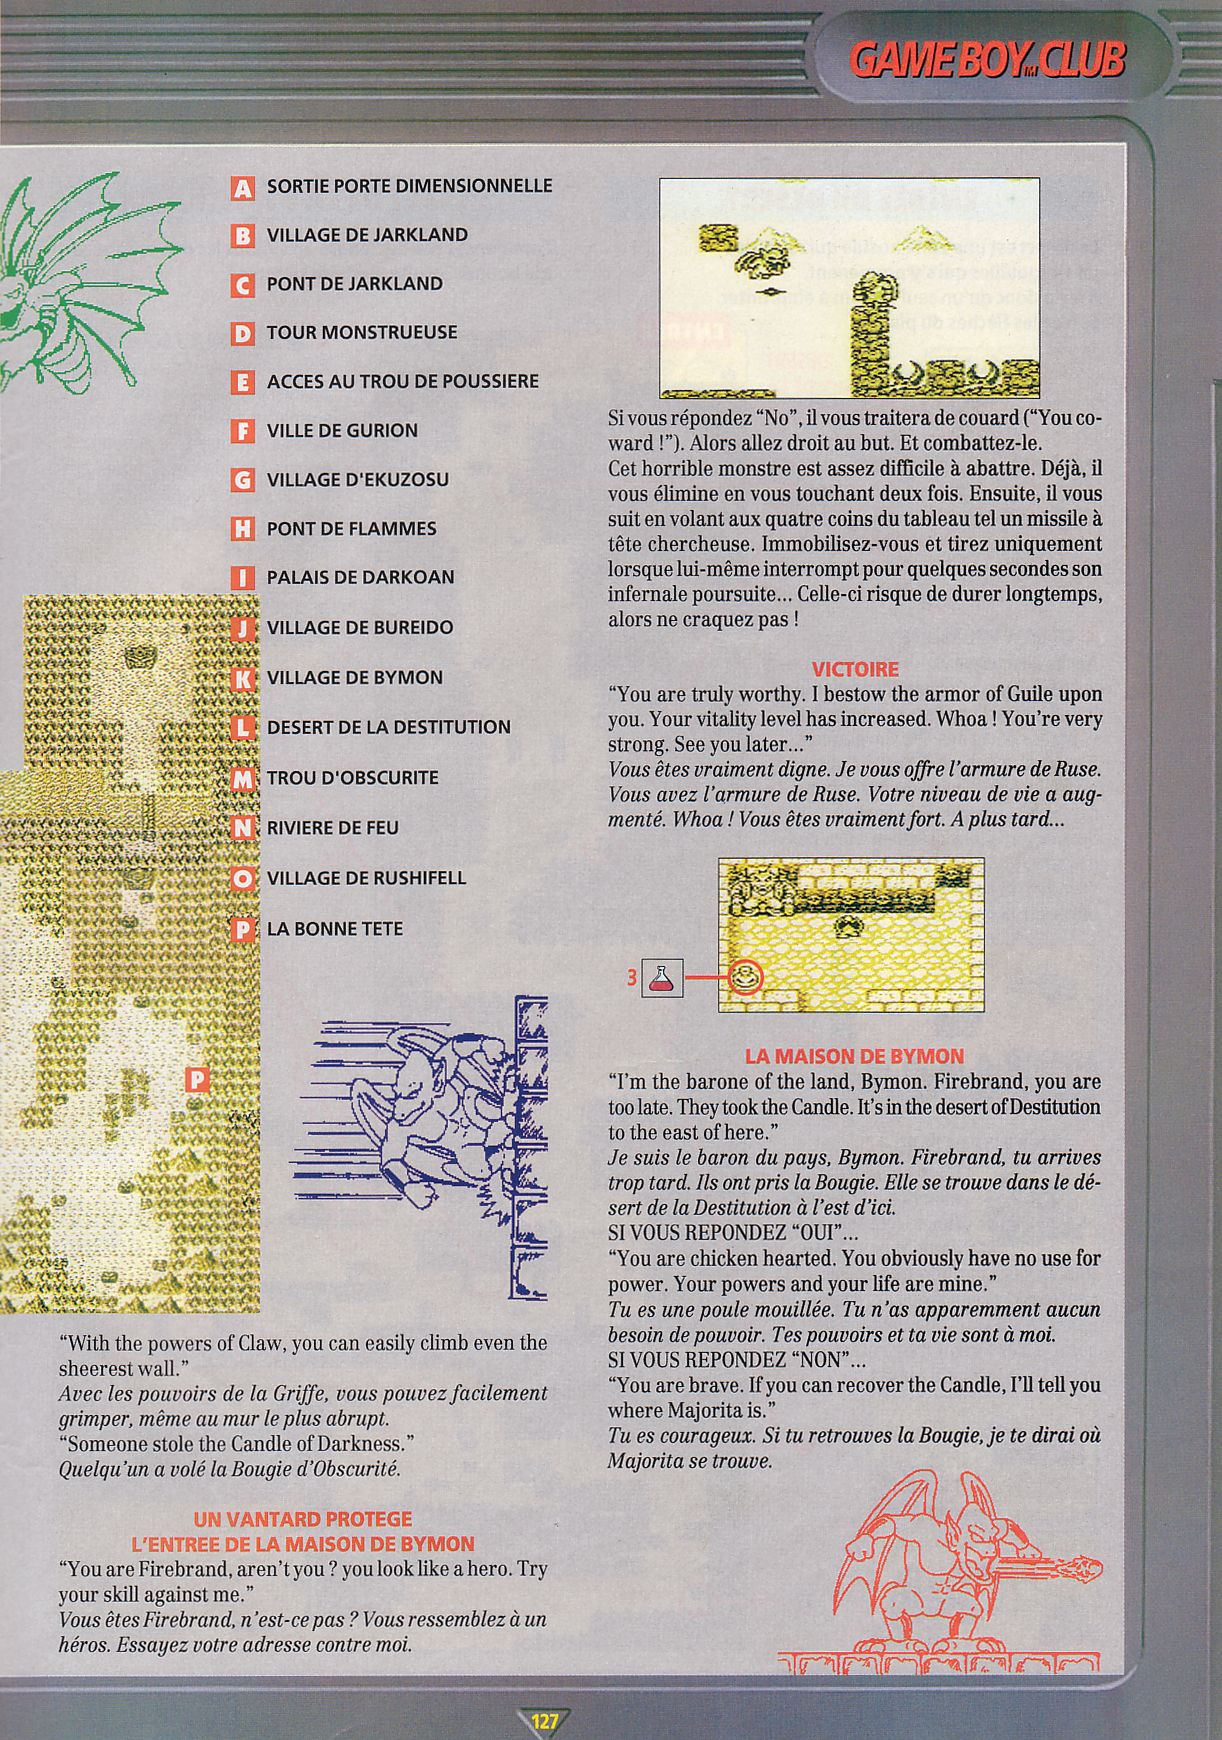 tests//1155/Nintendo Player 007 - Page 127 (1992-11-12).jpg